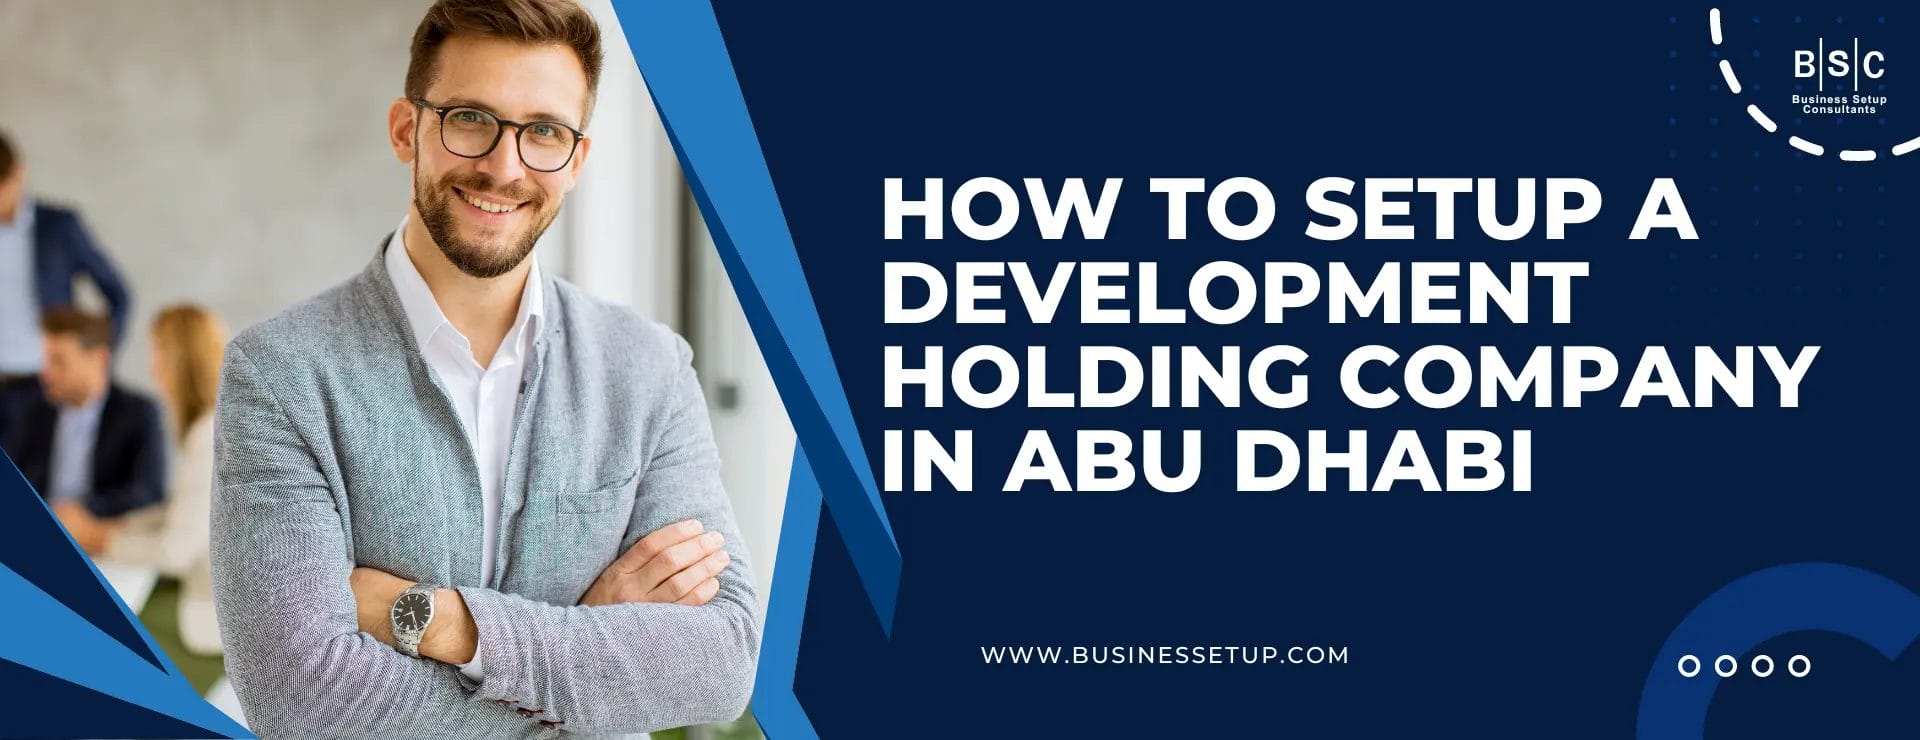 Abu Dhabi development holding company